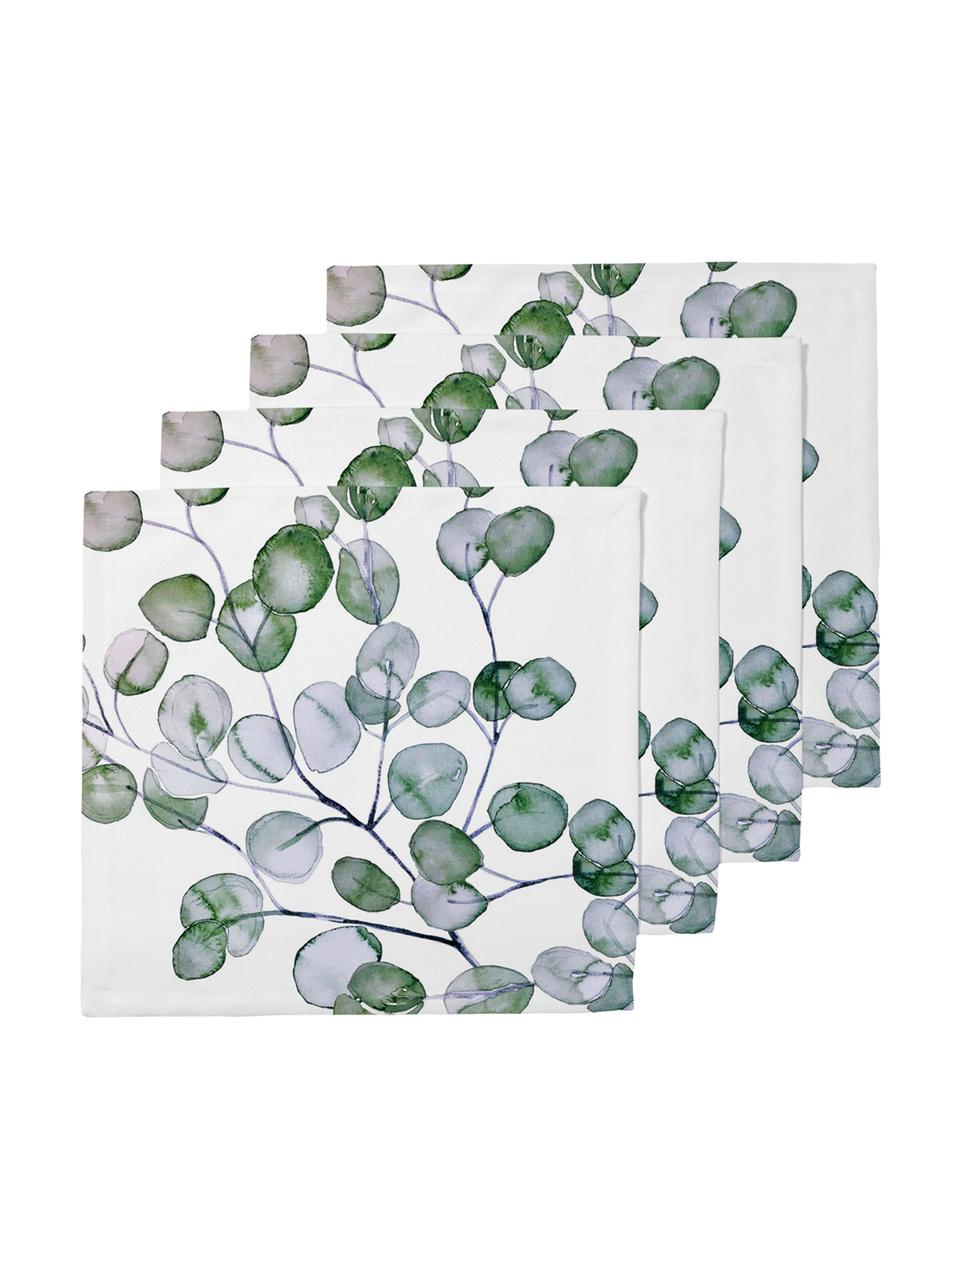 Textilné servítky Eucalyptus, 4 ks, Biela, zelená, sivá